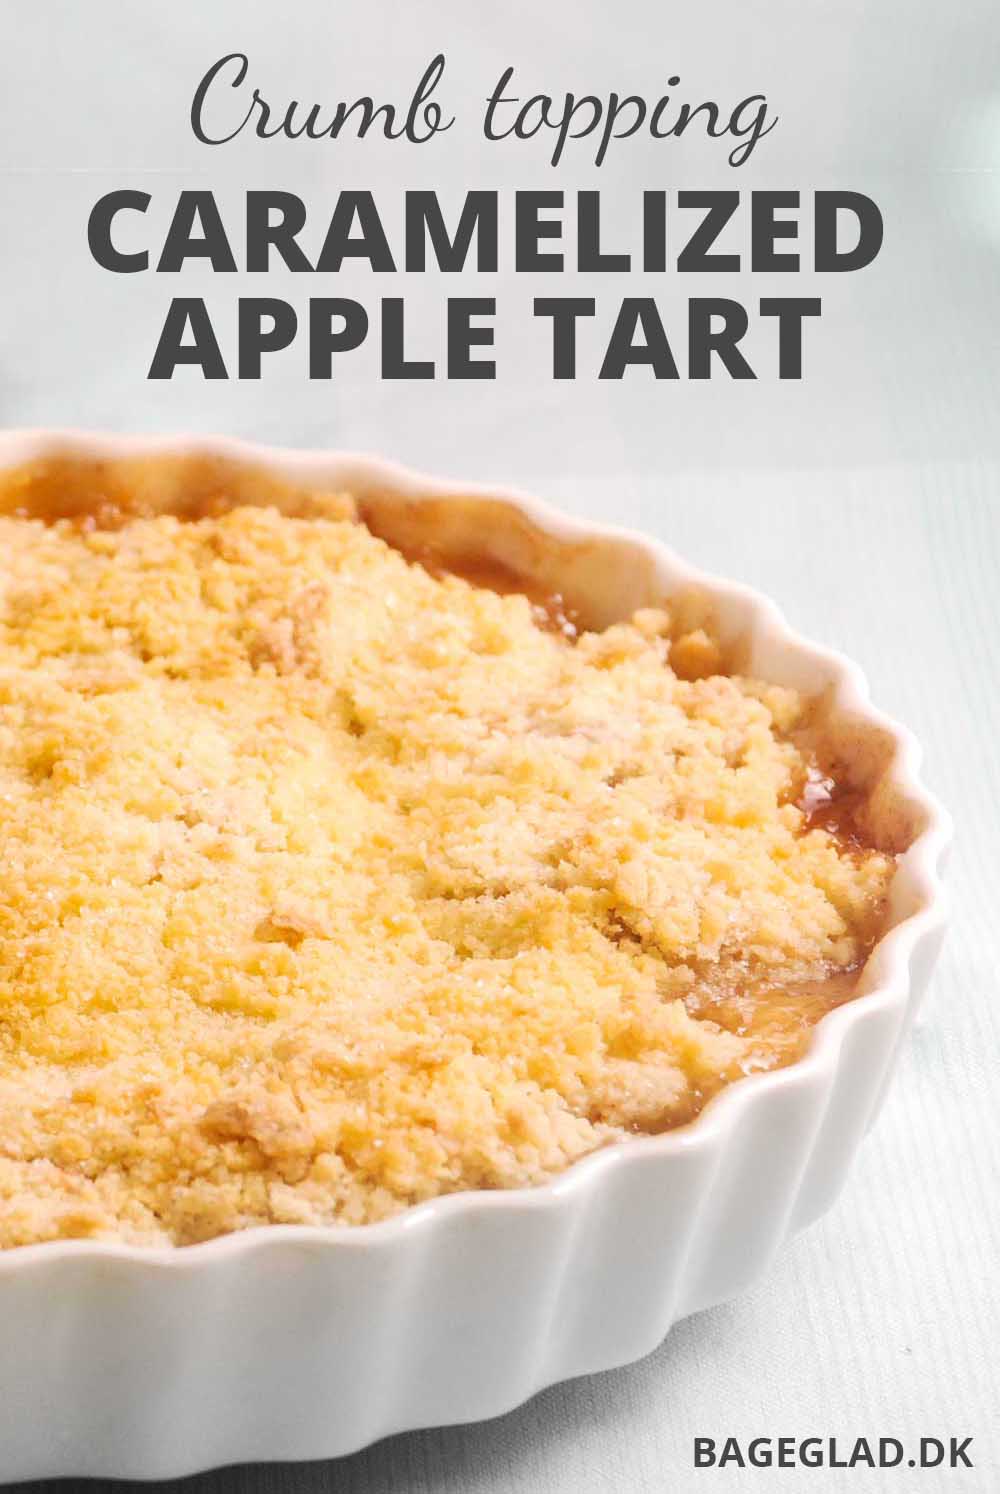 Amazing apple tart